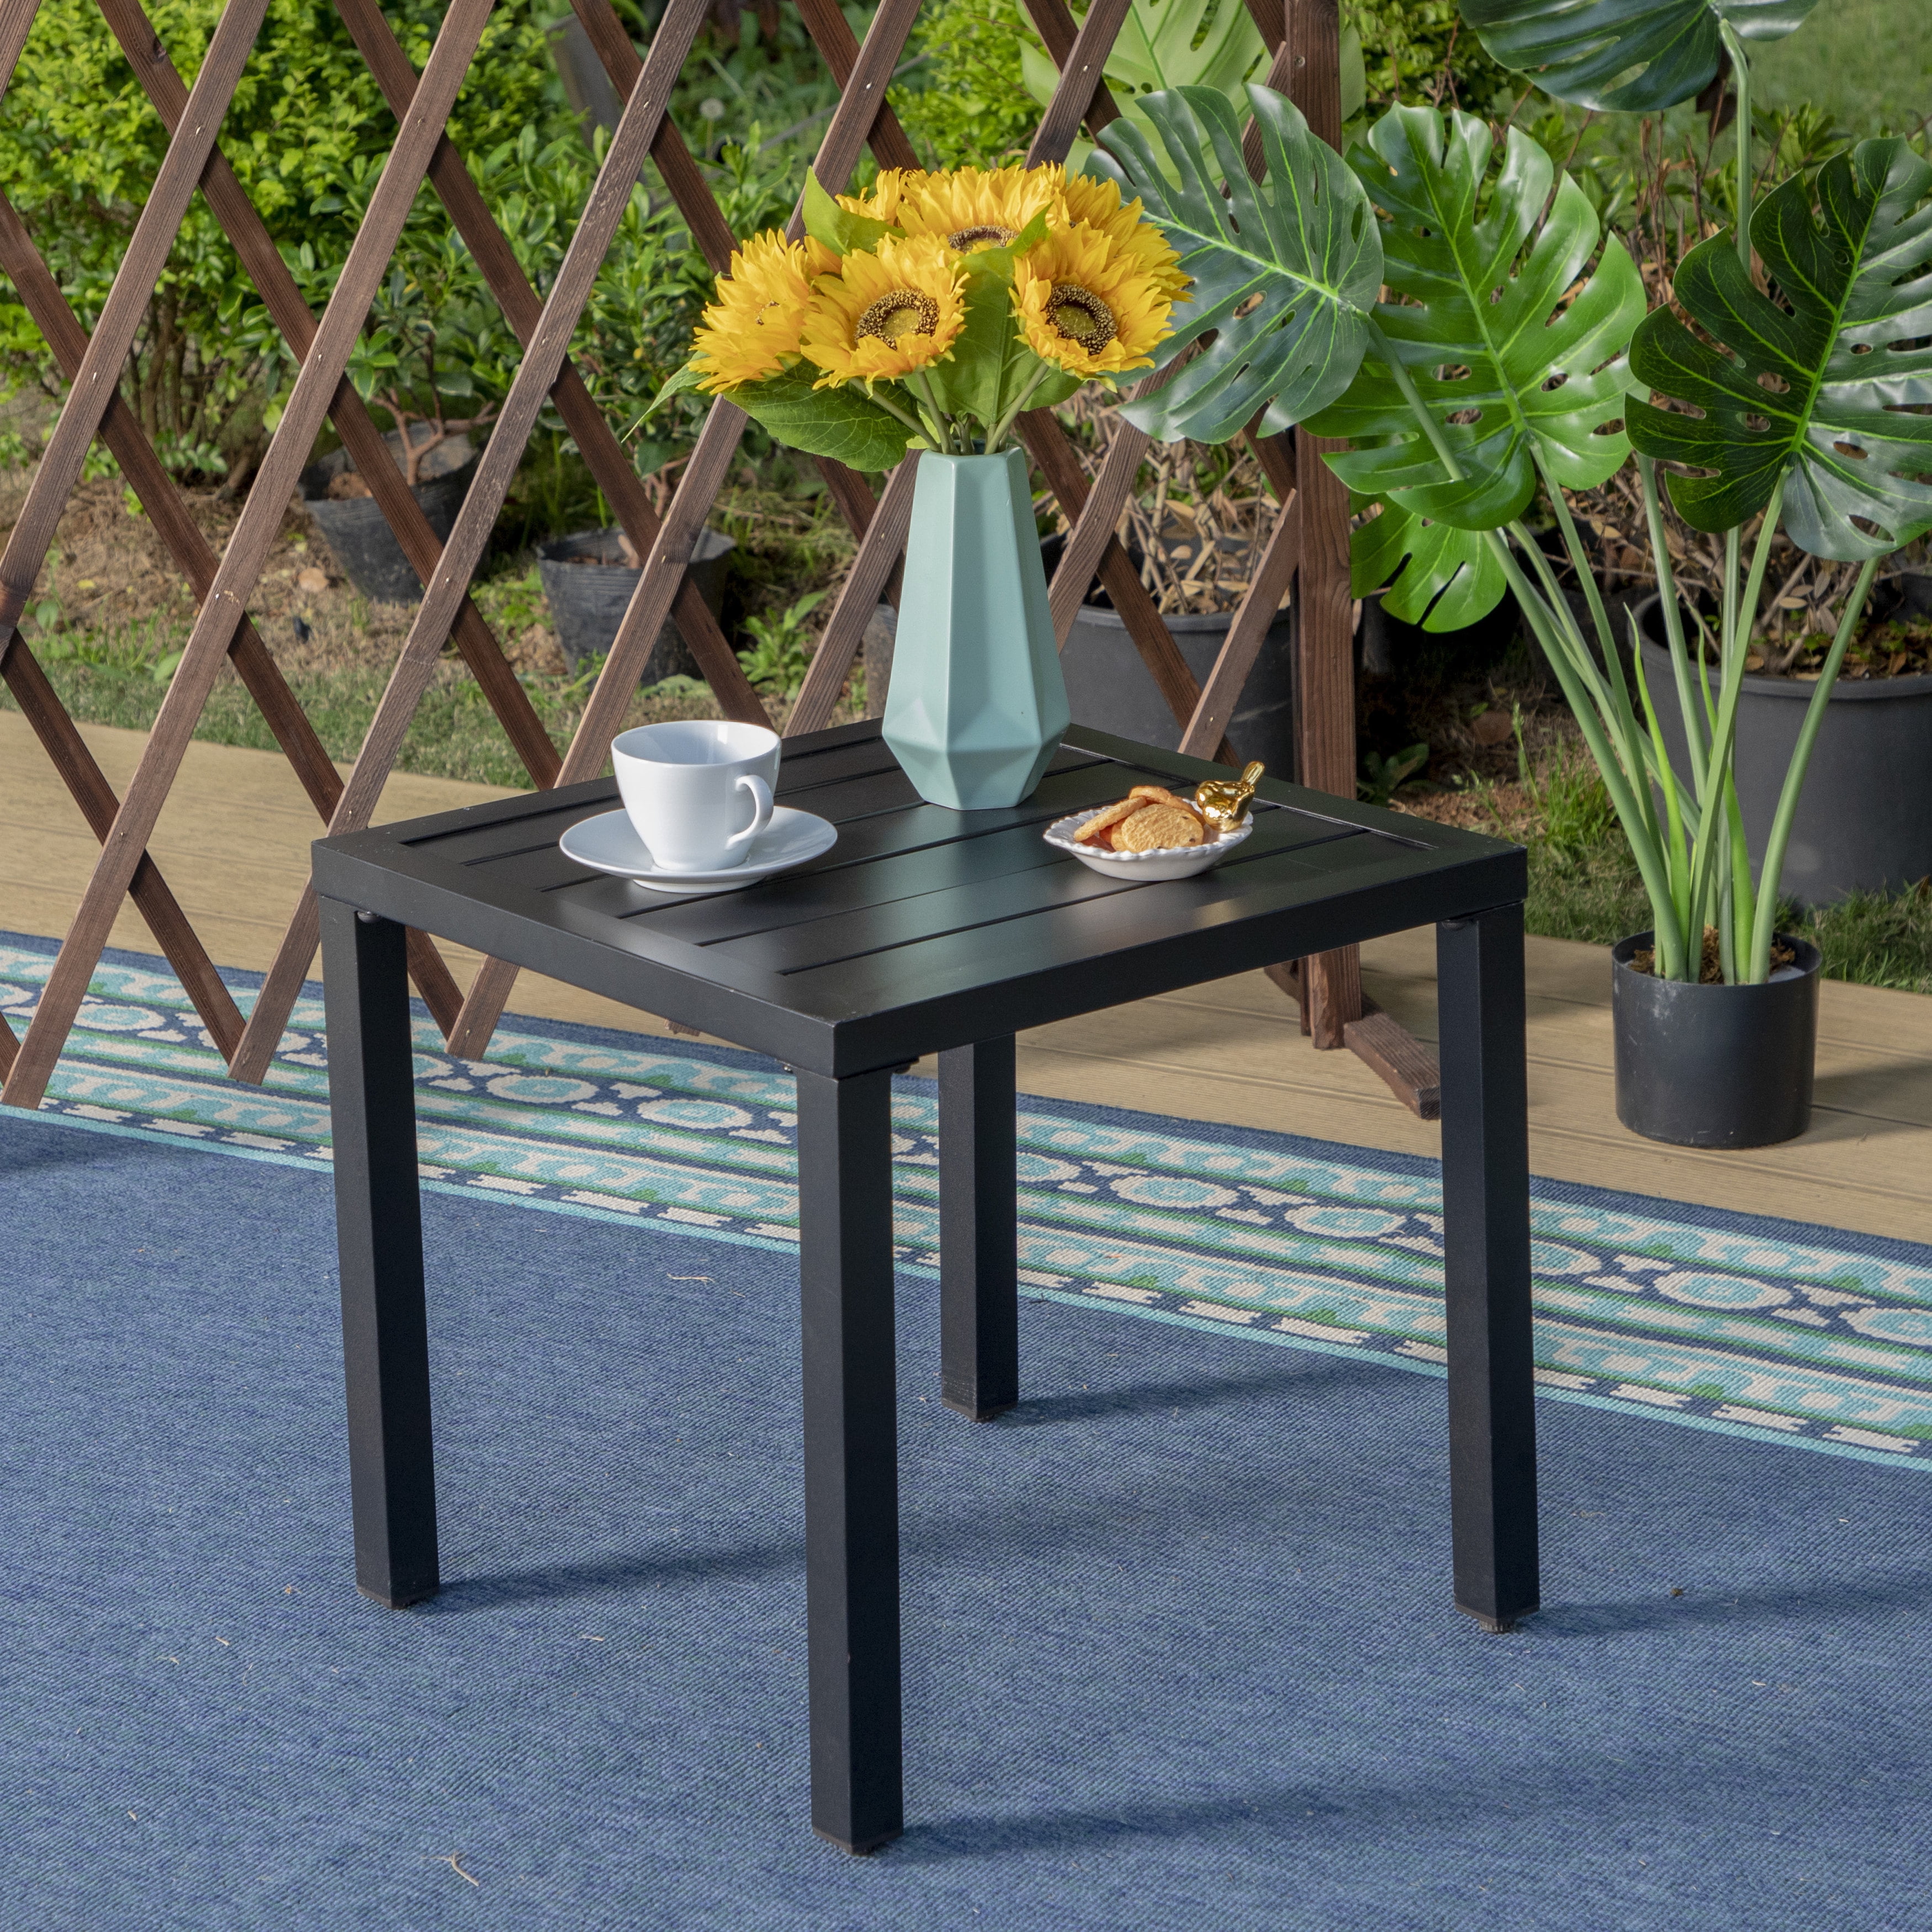 MFSTUDIO Black Patio Table Metal Square Coffee Tea Bistro Table Small Side End Adjustable Outdoor Furniture Table,Black 